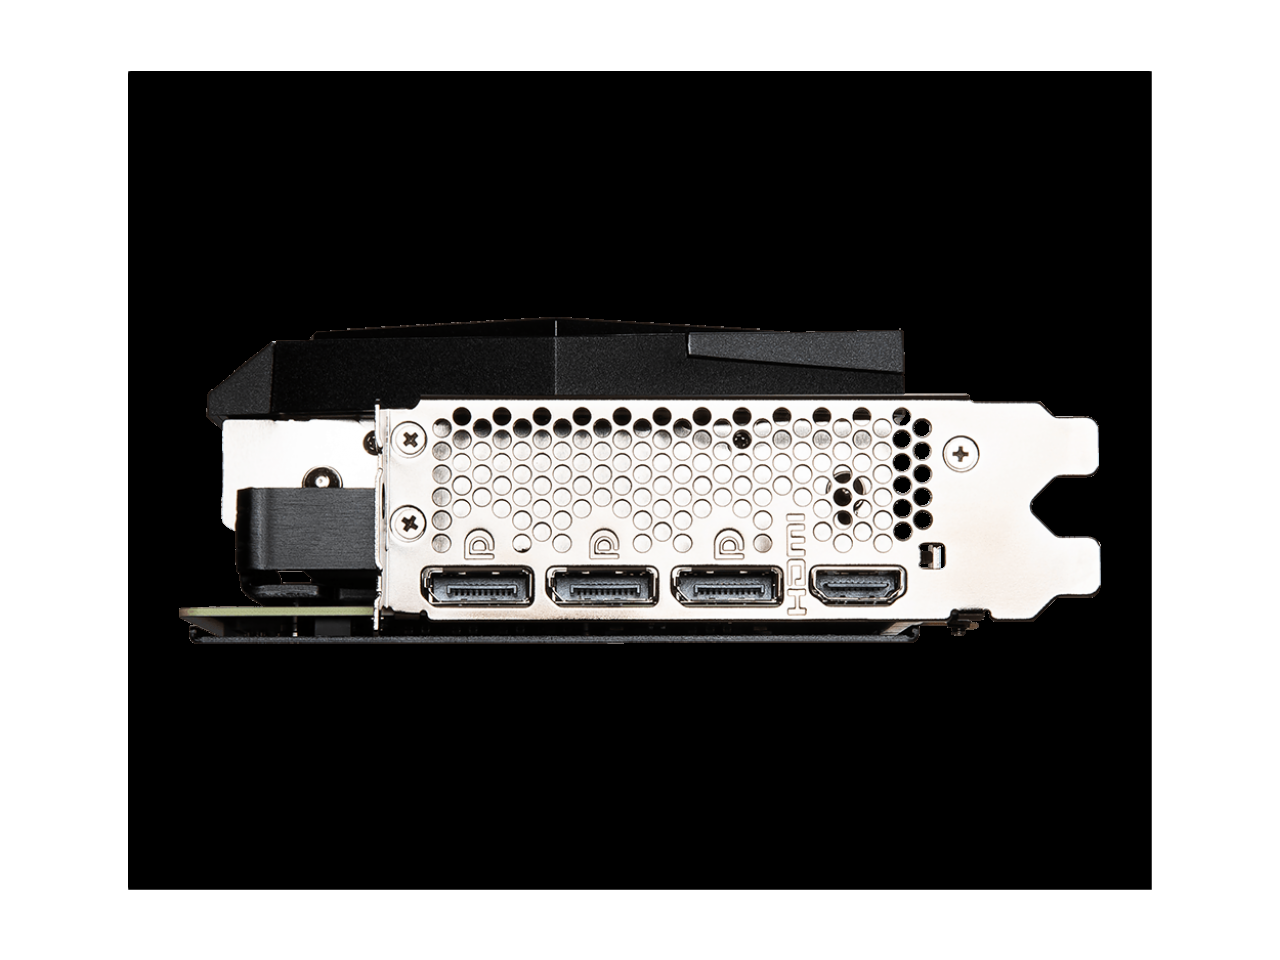 MSI Gaming GeForce RTX 3080 12GB GDDR6X PCI Express 4.0 Video Card RTX 3080 GAMING TRIO PLUS 12G LHR